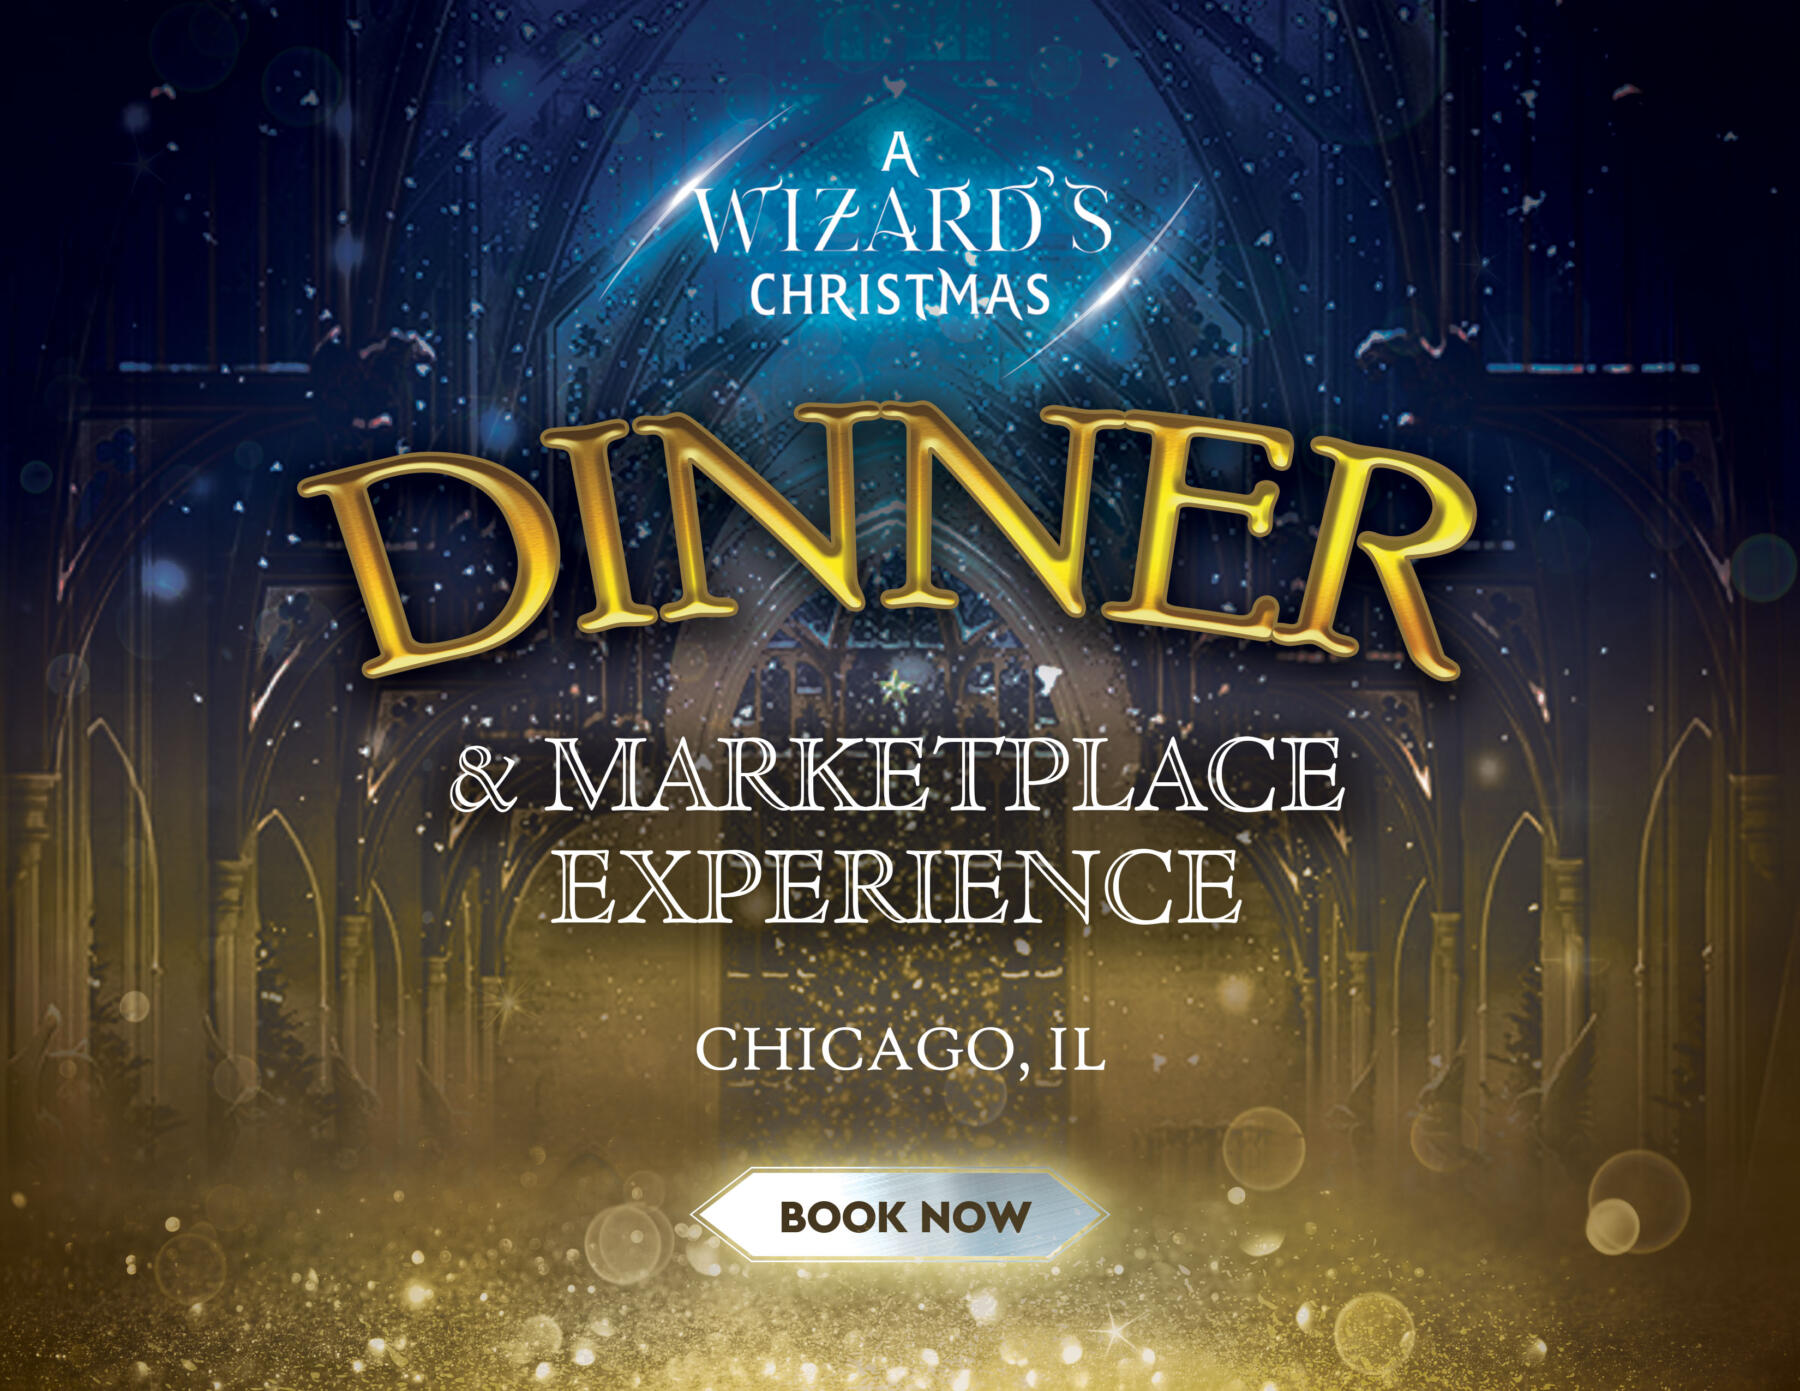 WizardChristmas_DinnerMagicalMarkertplace_Chicago